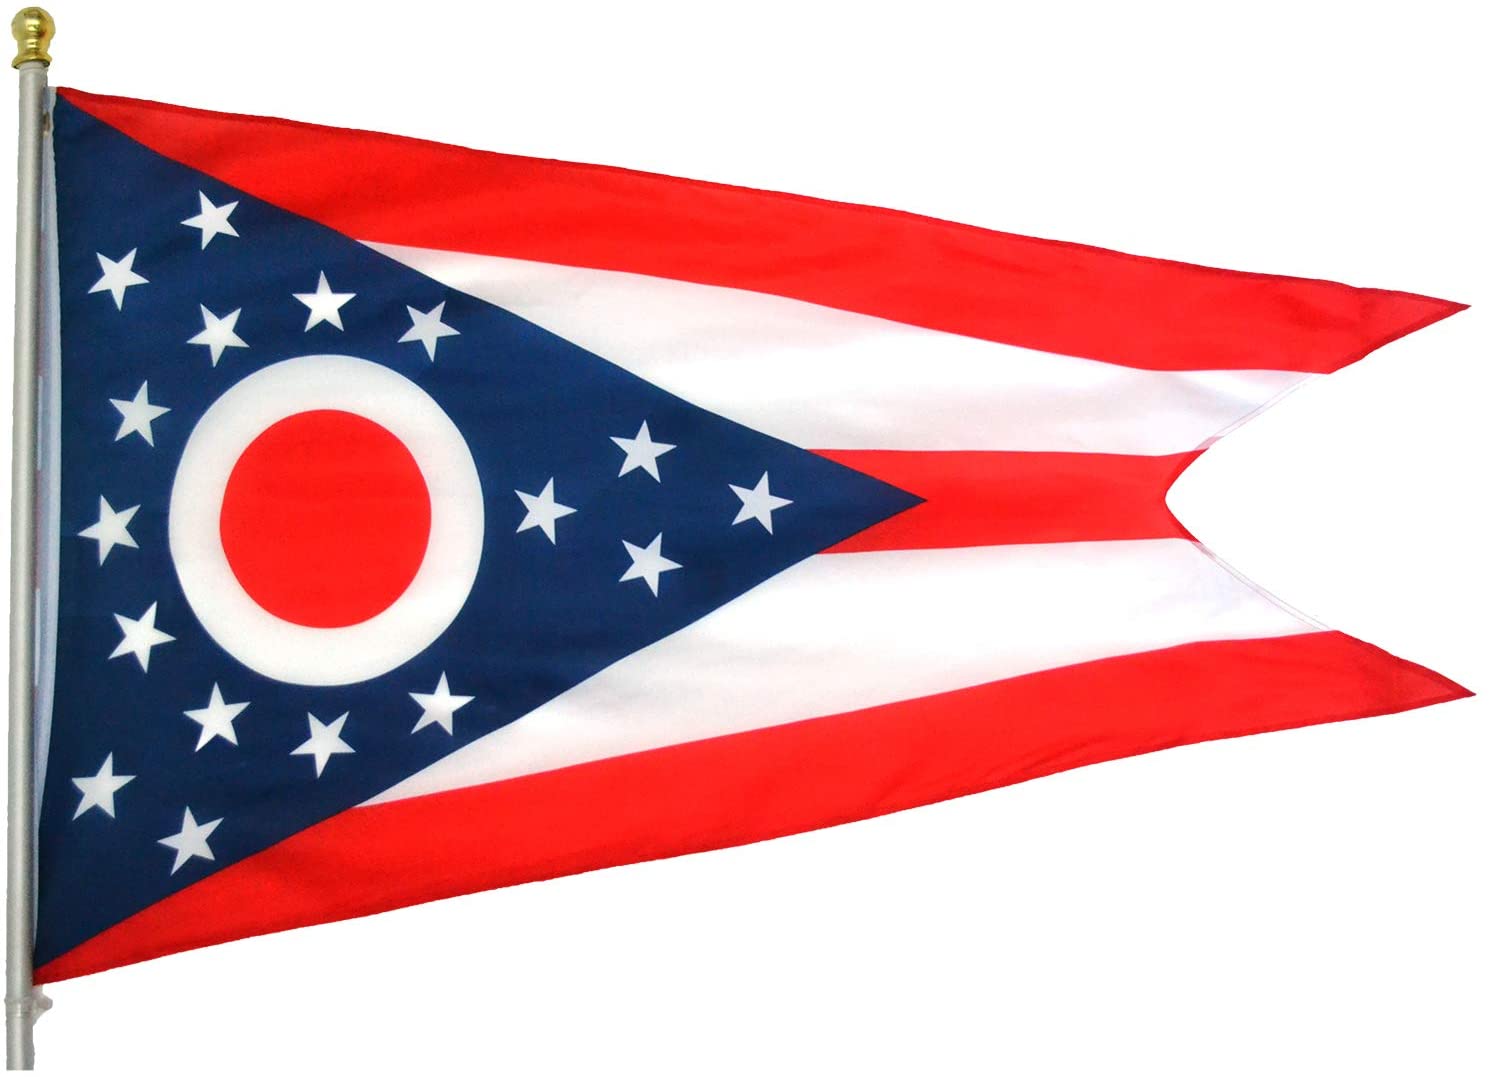 Ohio License plate lookup 